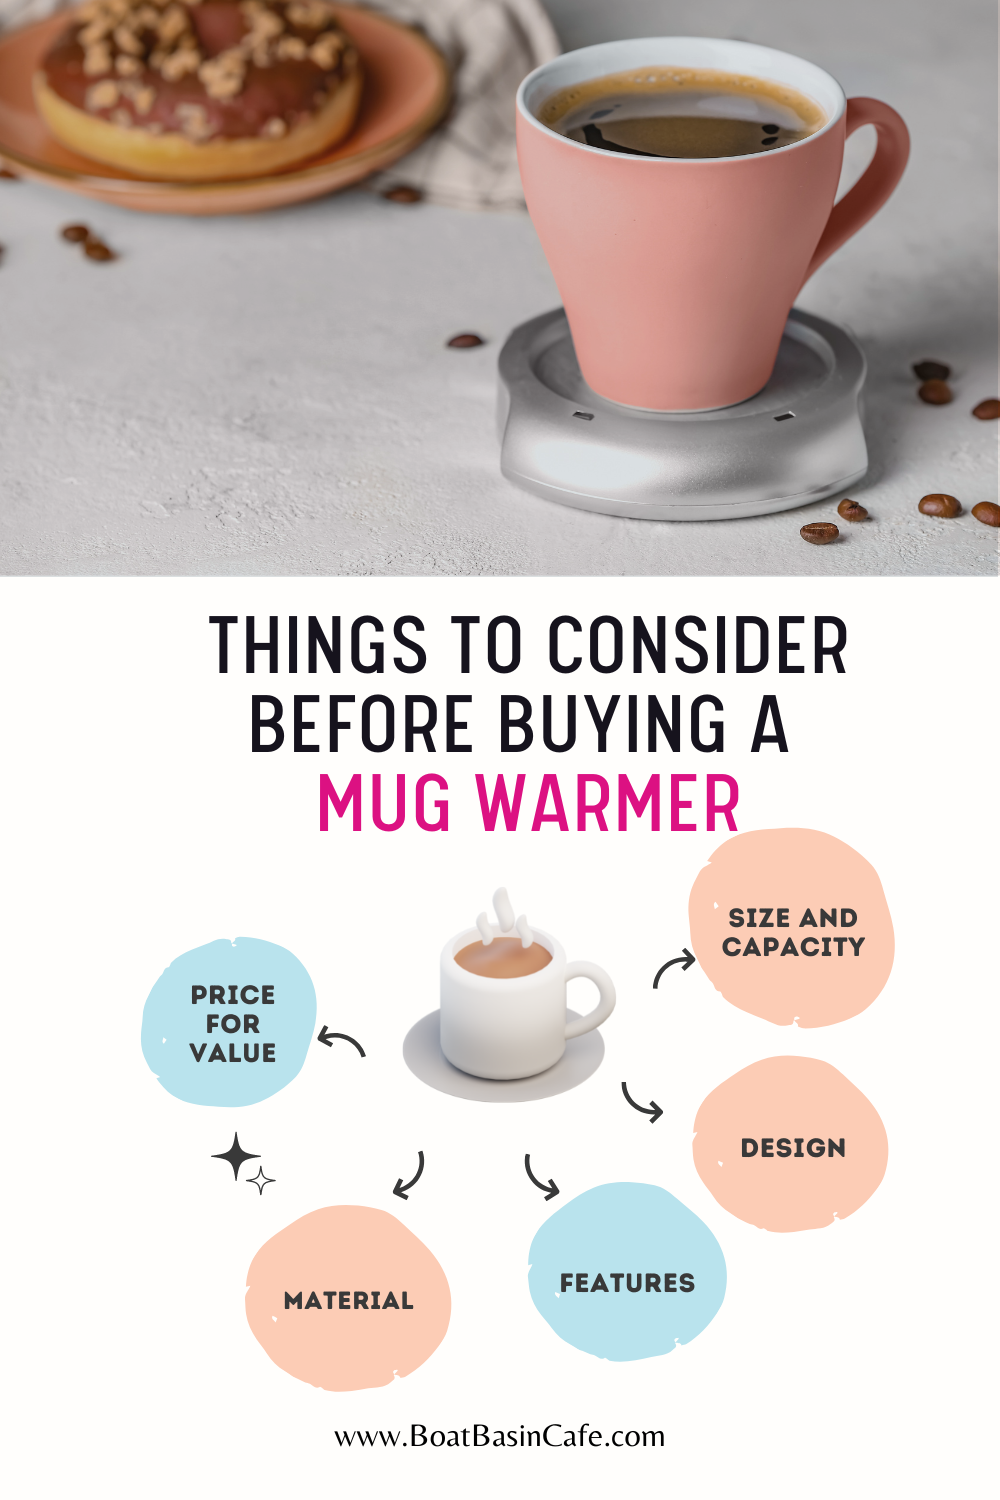 Things to Consider Before Buying a Mug Warmer